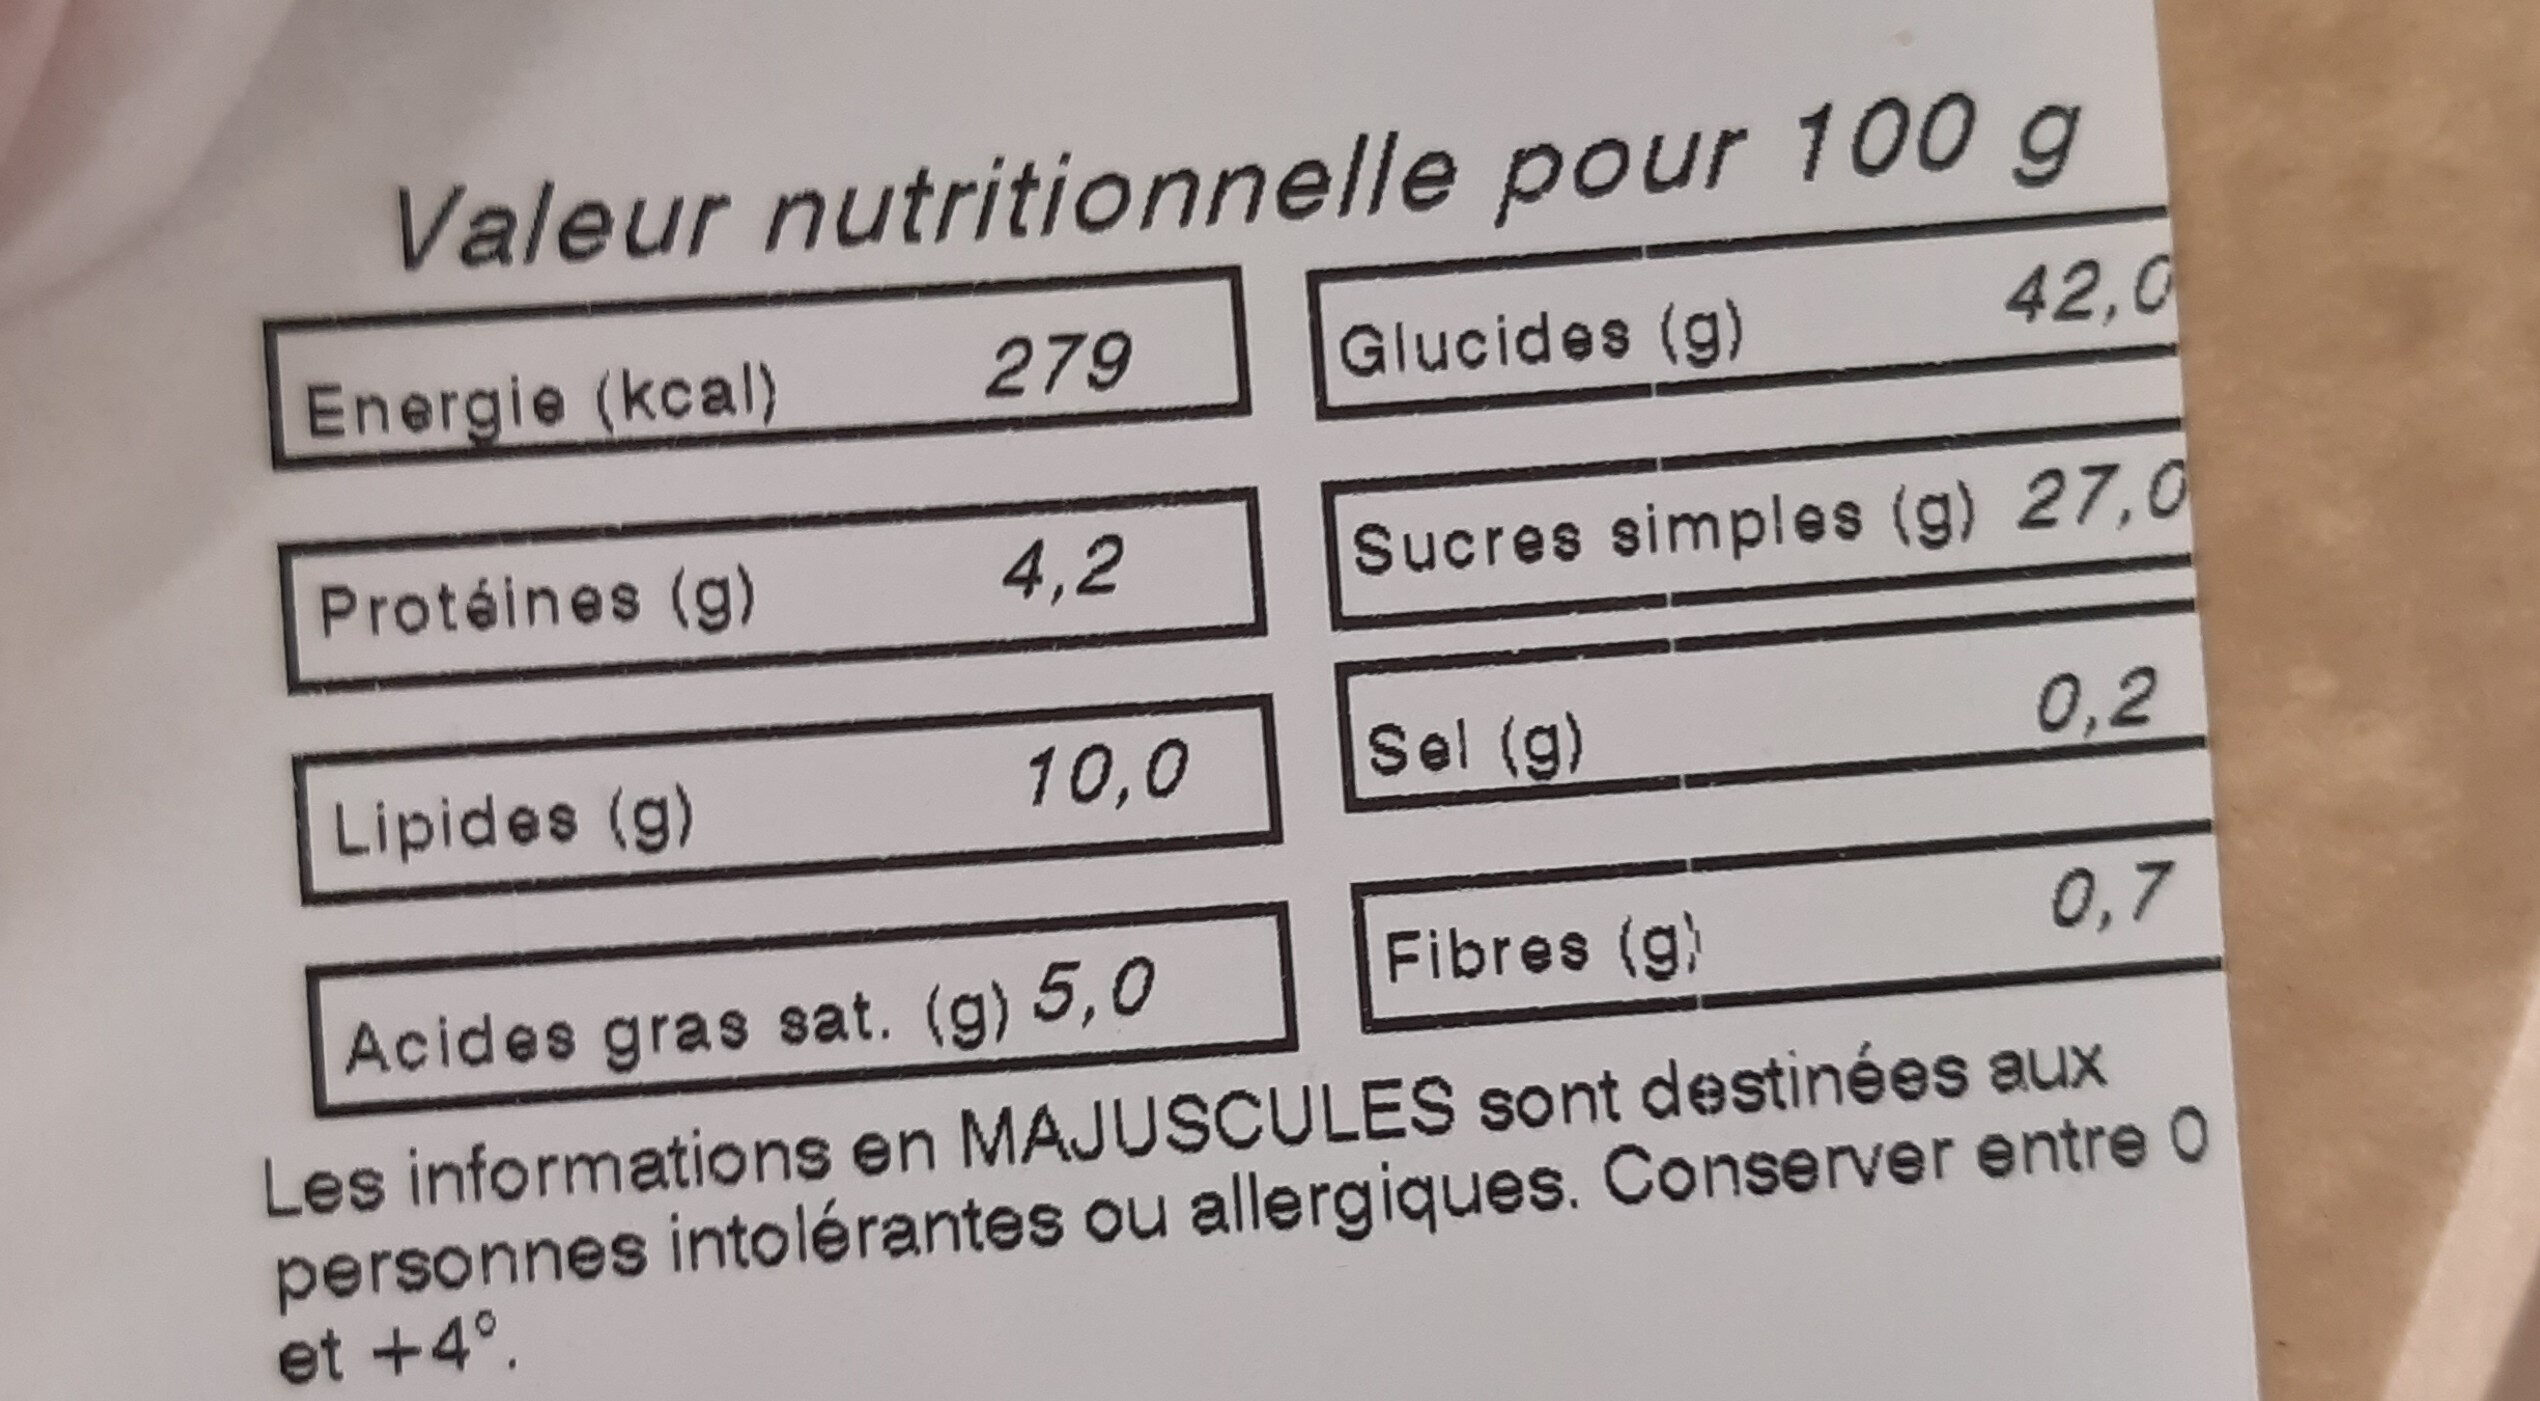 Tarte citron meringuée - Nutrition facts - fr